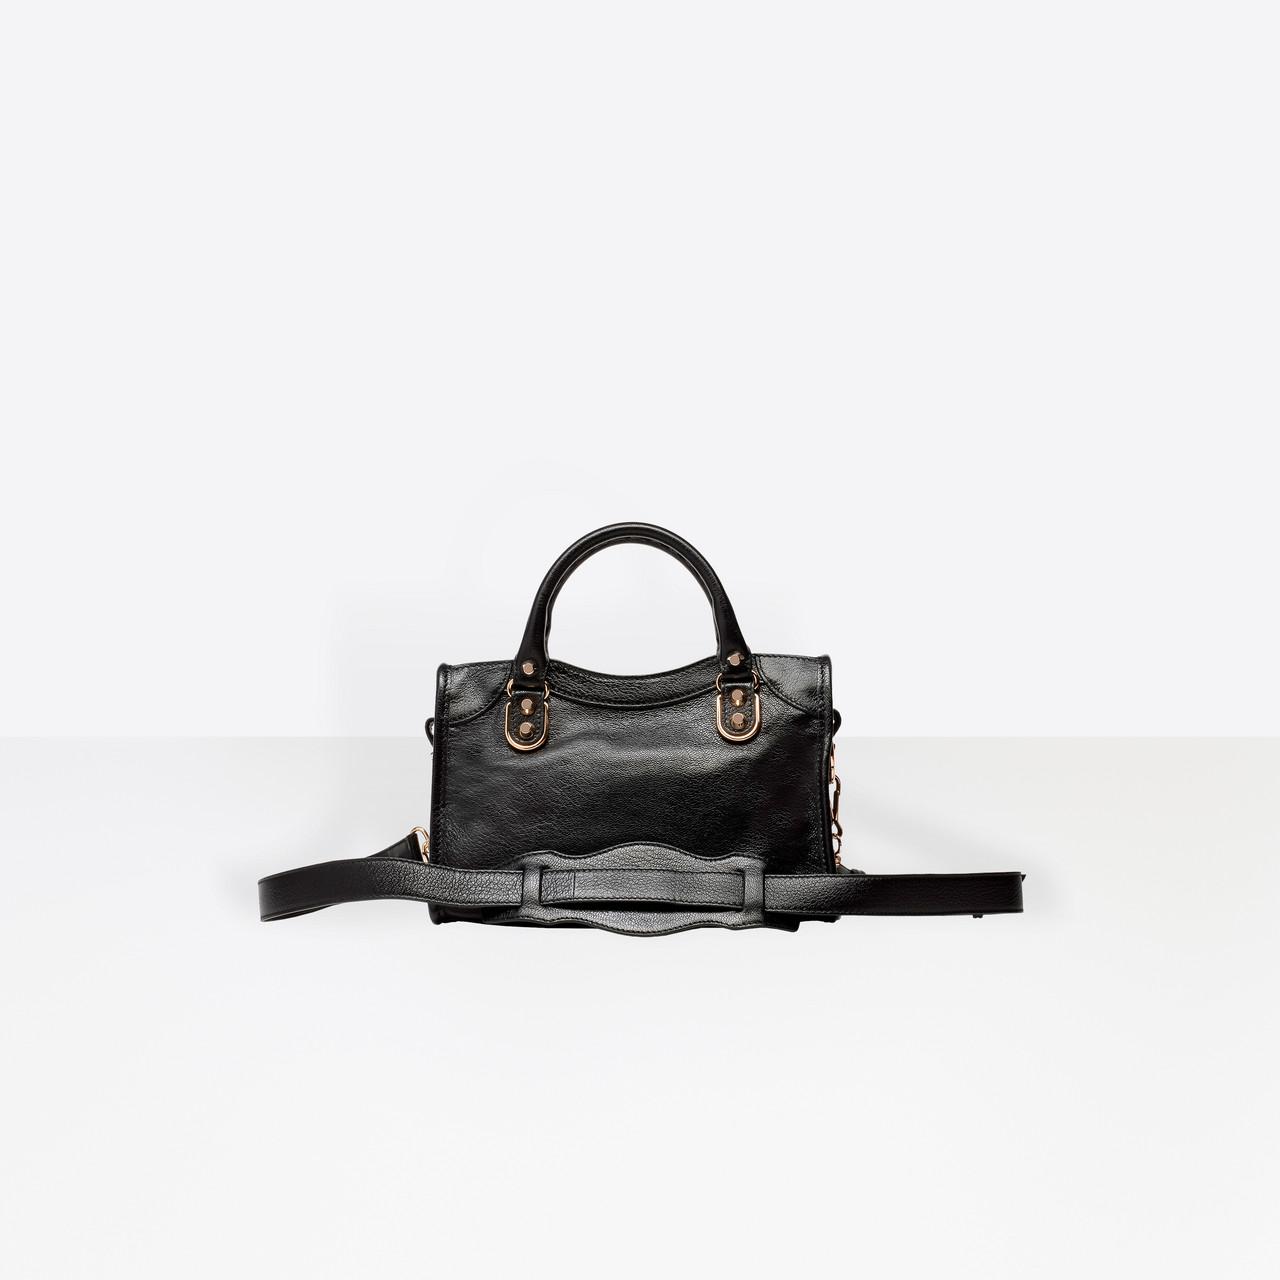 Balenciaga Leather Metallic Edge City Mini Shoulder Bag in Black - Lyst